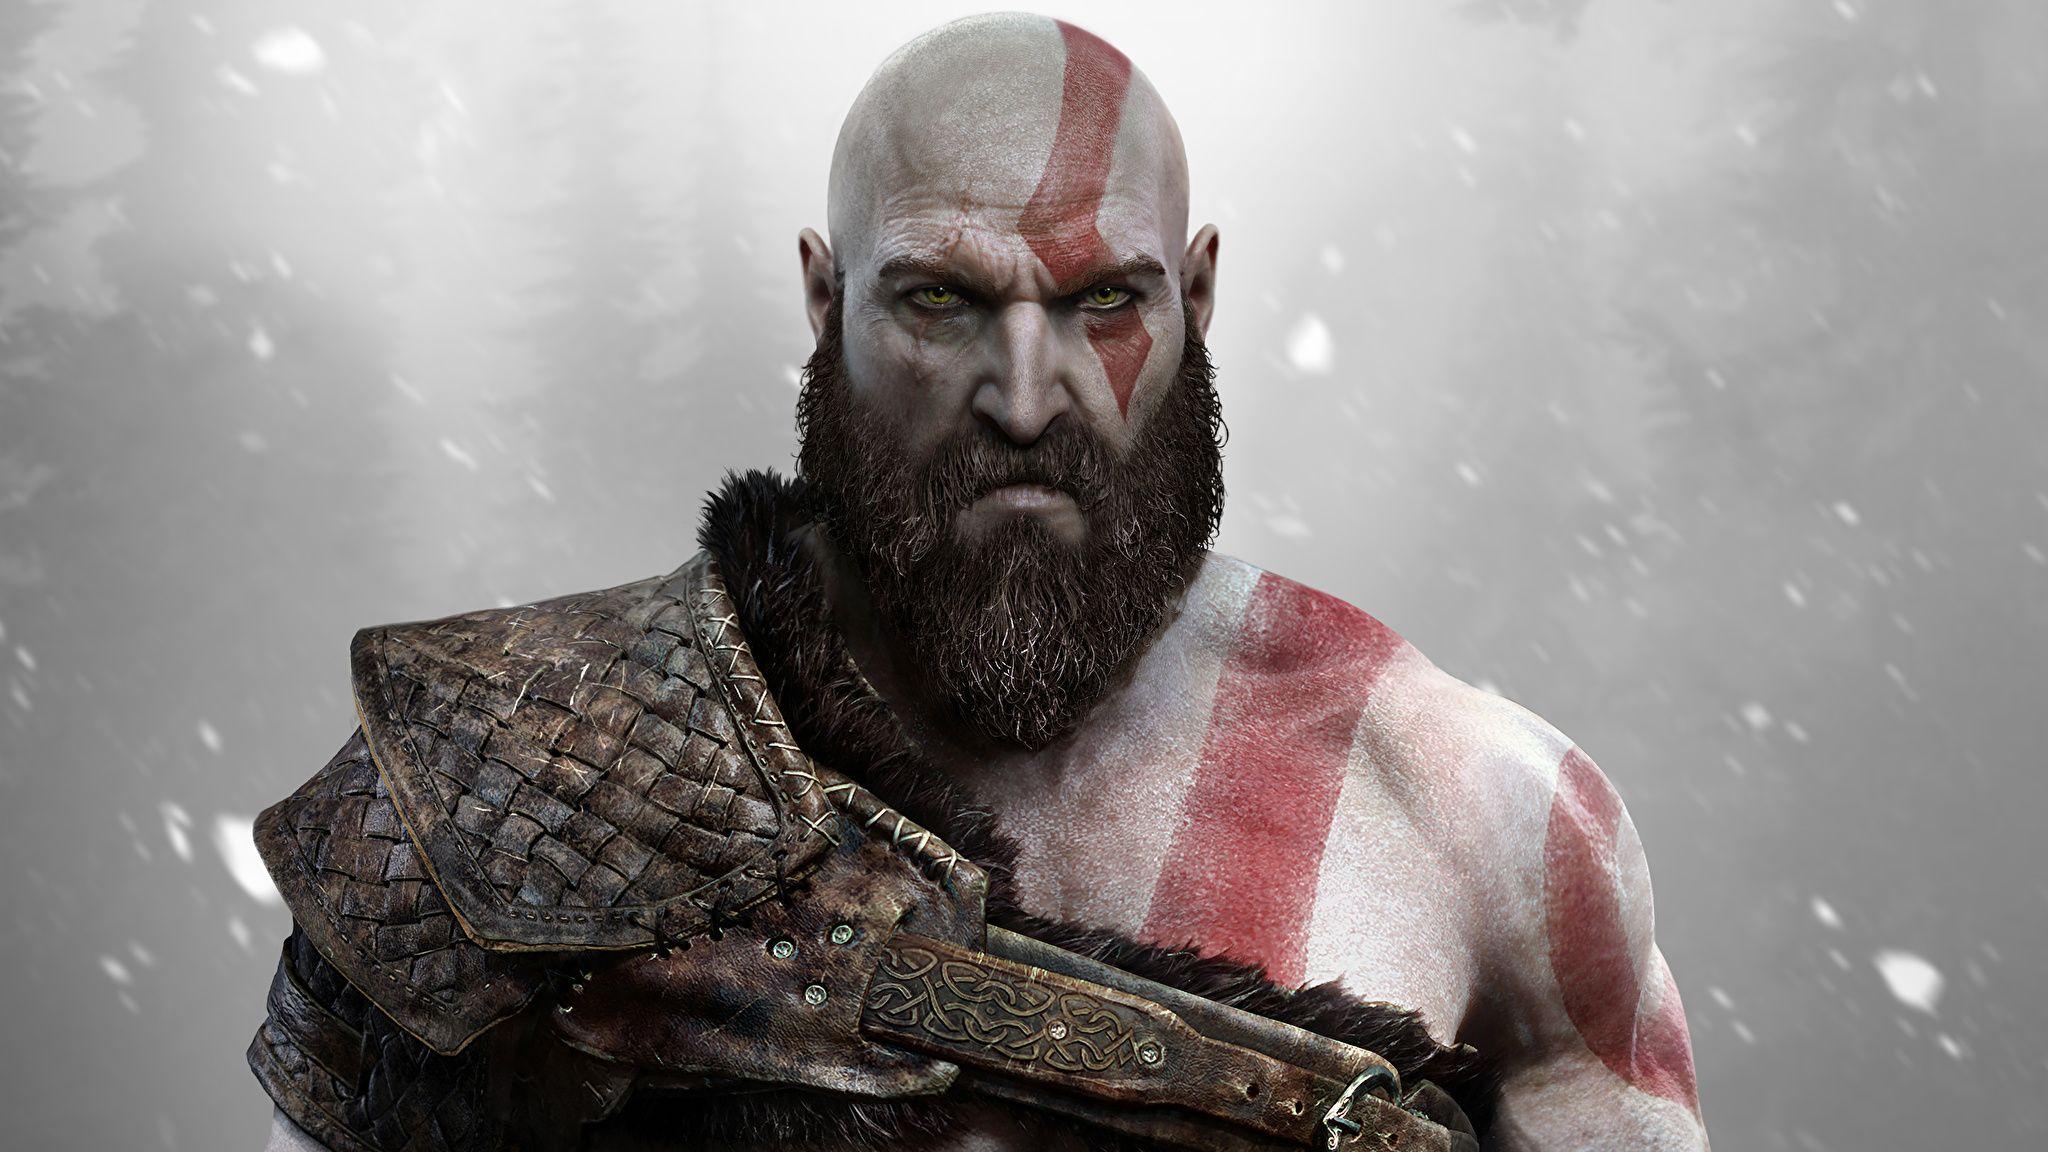 Wallpaper God of War Man PS4 Kratos Beard Fantasy Games 2048x1152